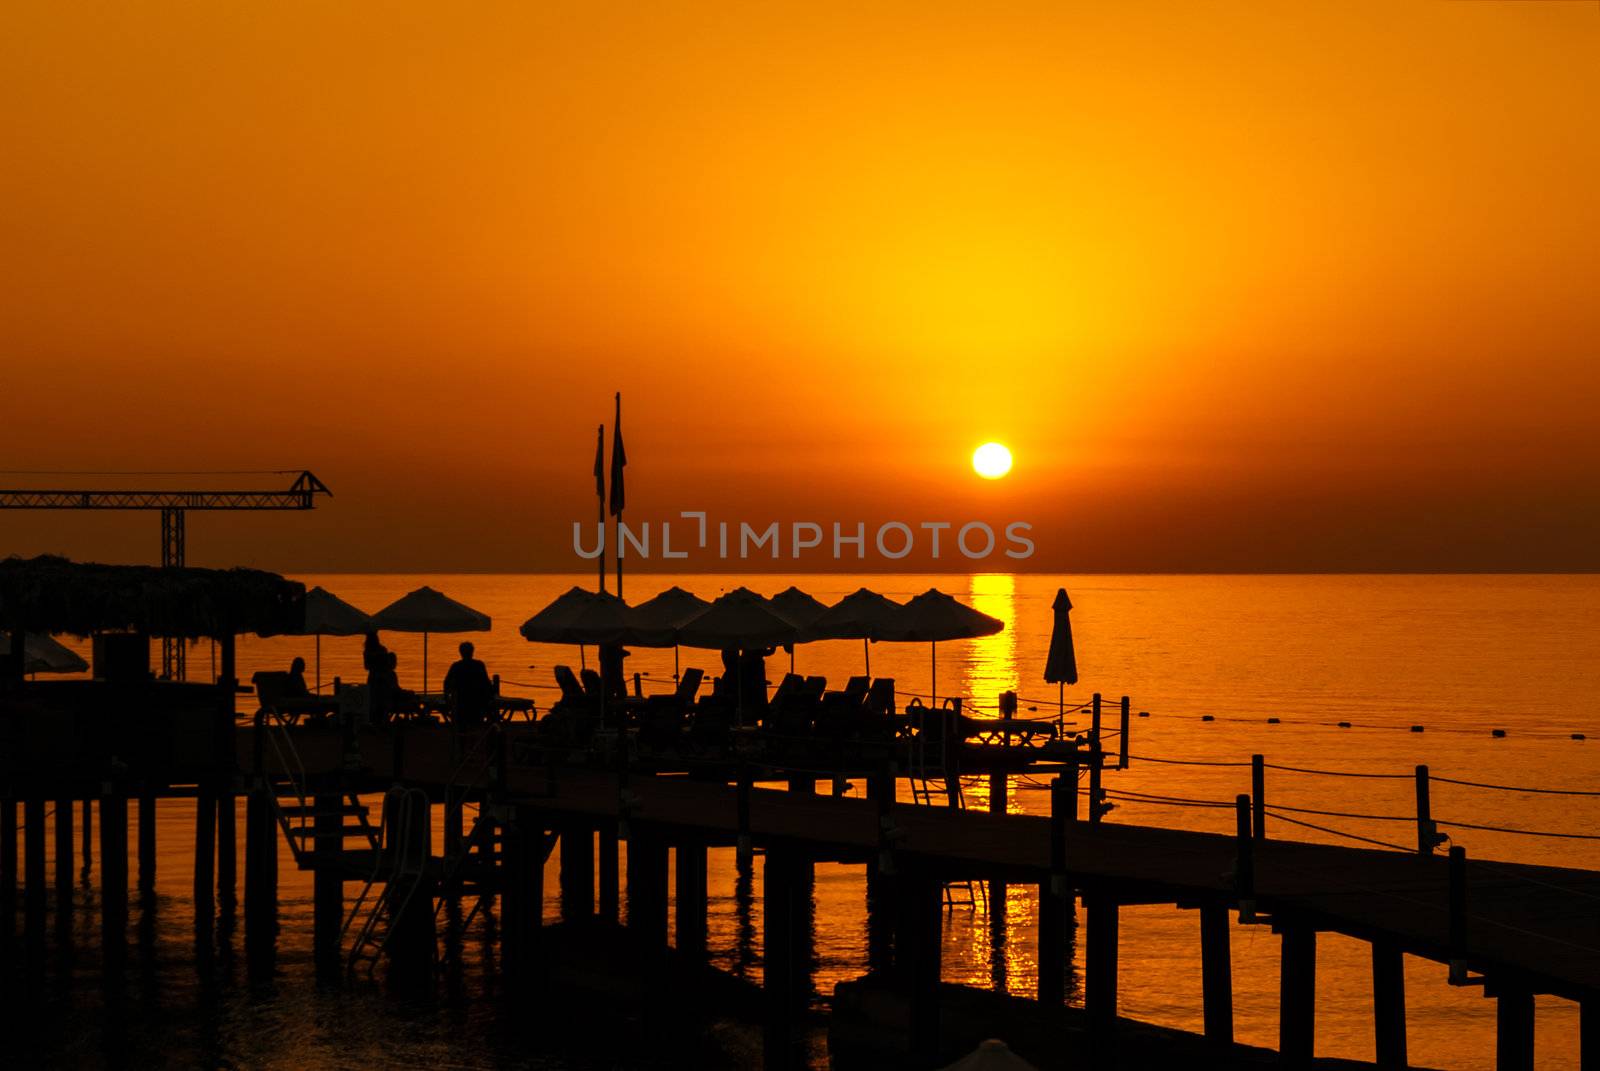 Pier Resort Silhouette at the Sunrise over sea